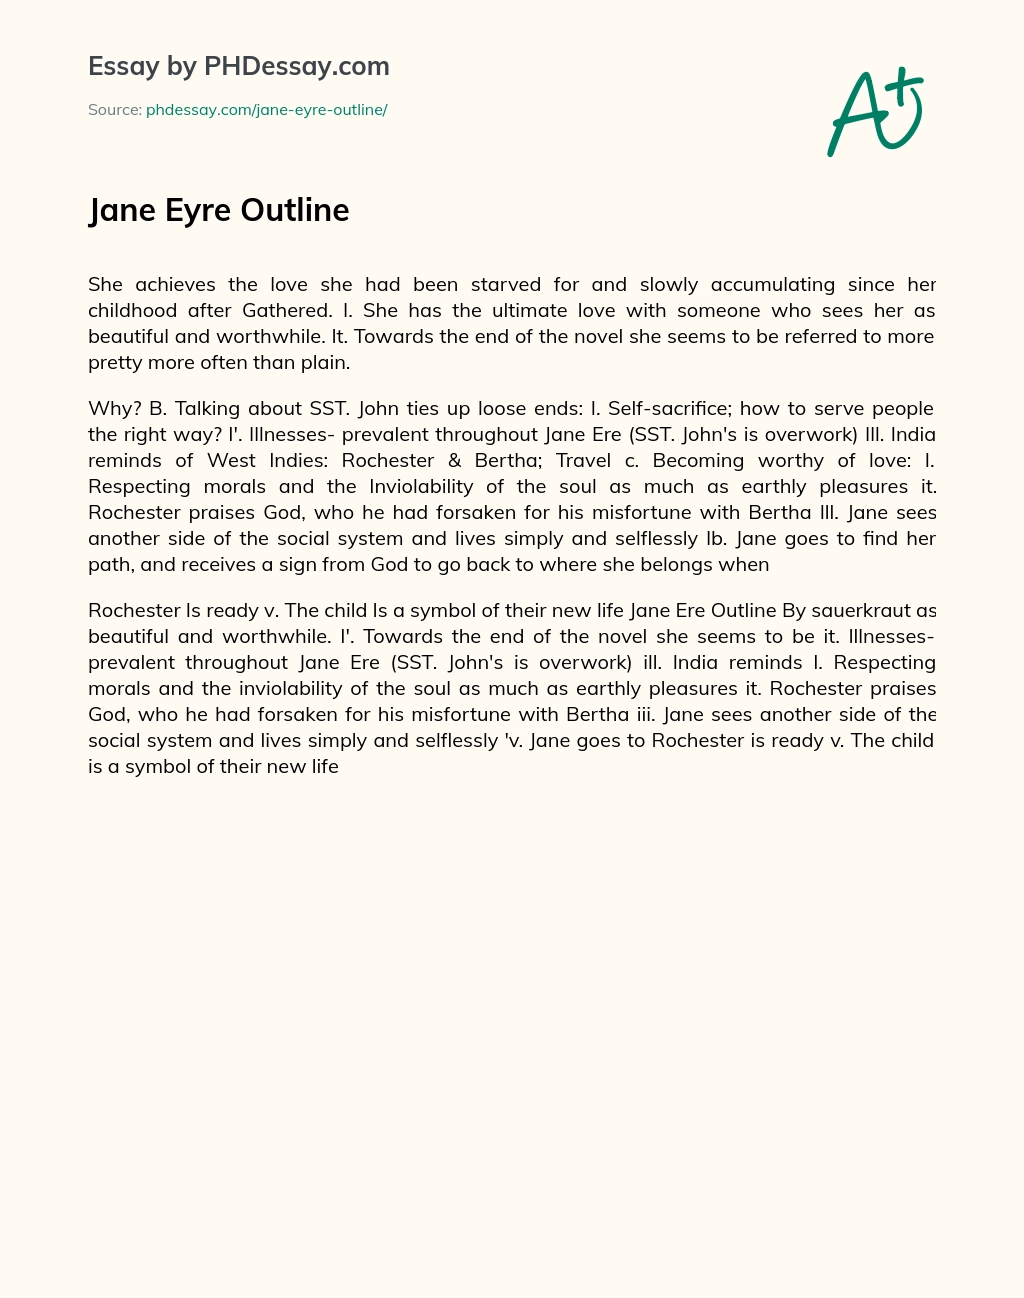 Jane Eyre Outline essay